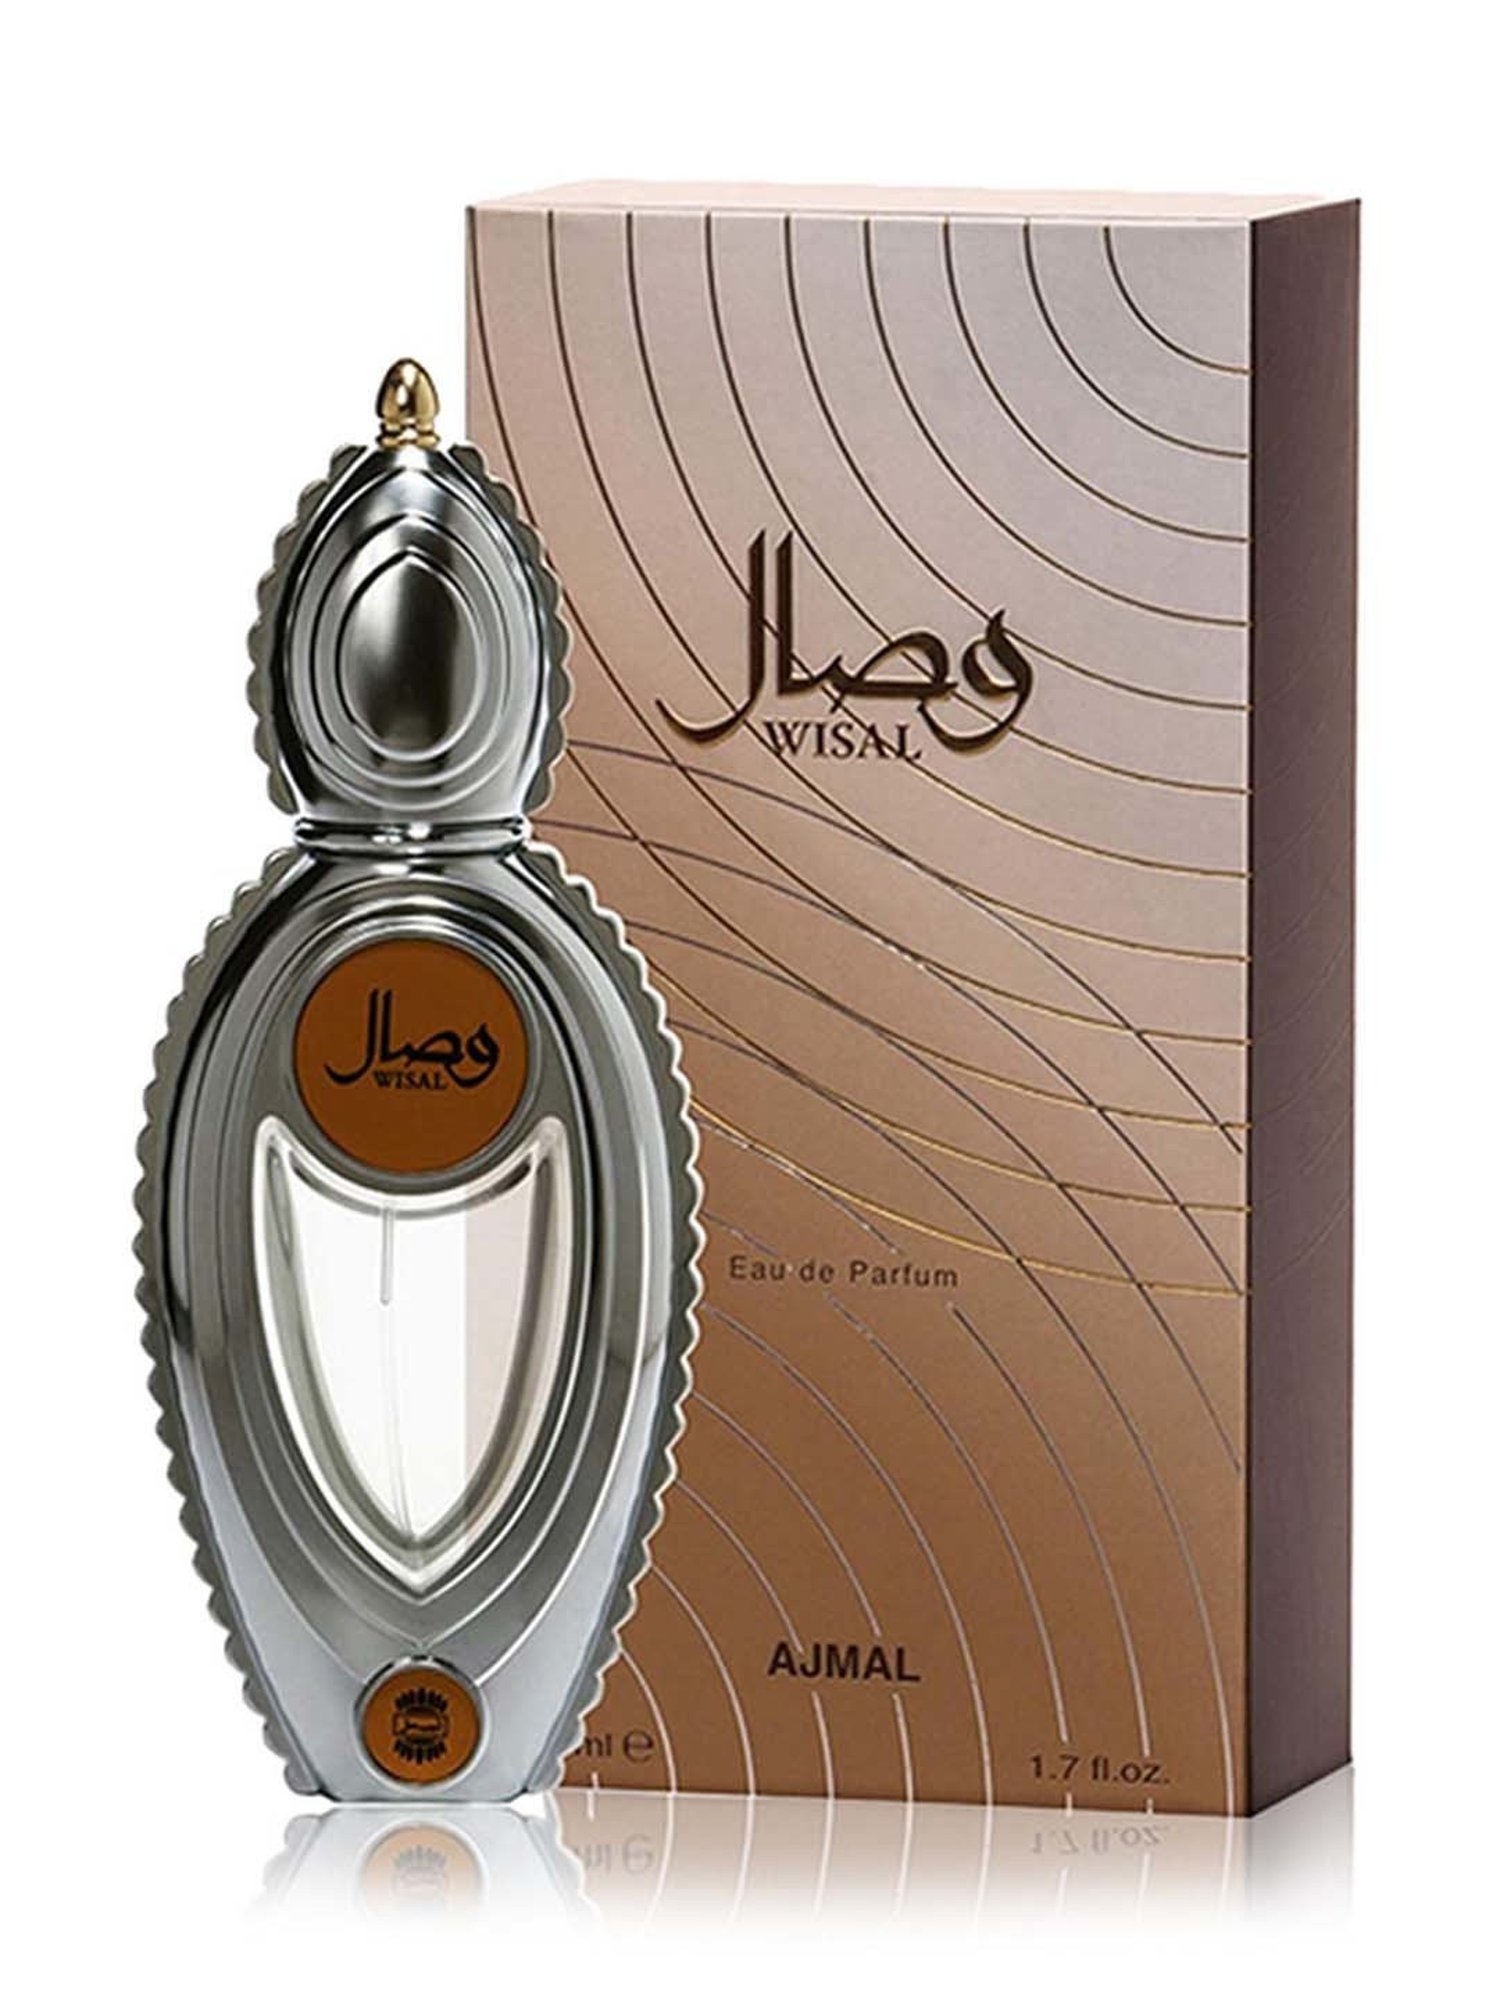 Buy Ajmal Wisal Eau de Parfum for Women - 50 ml Online At Best